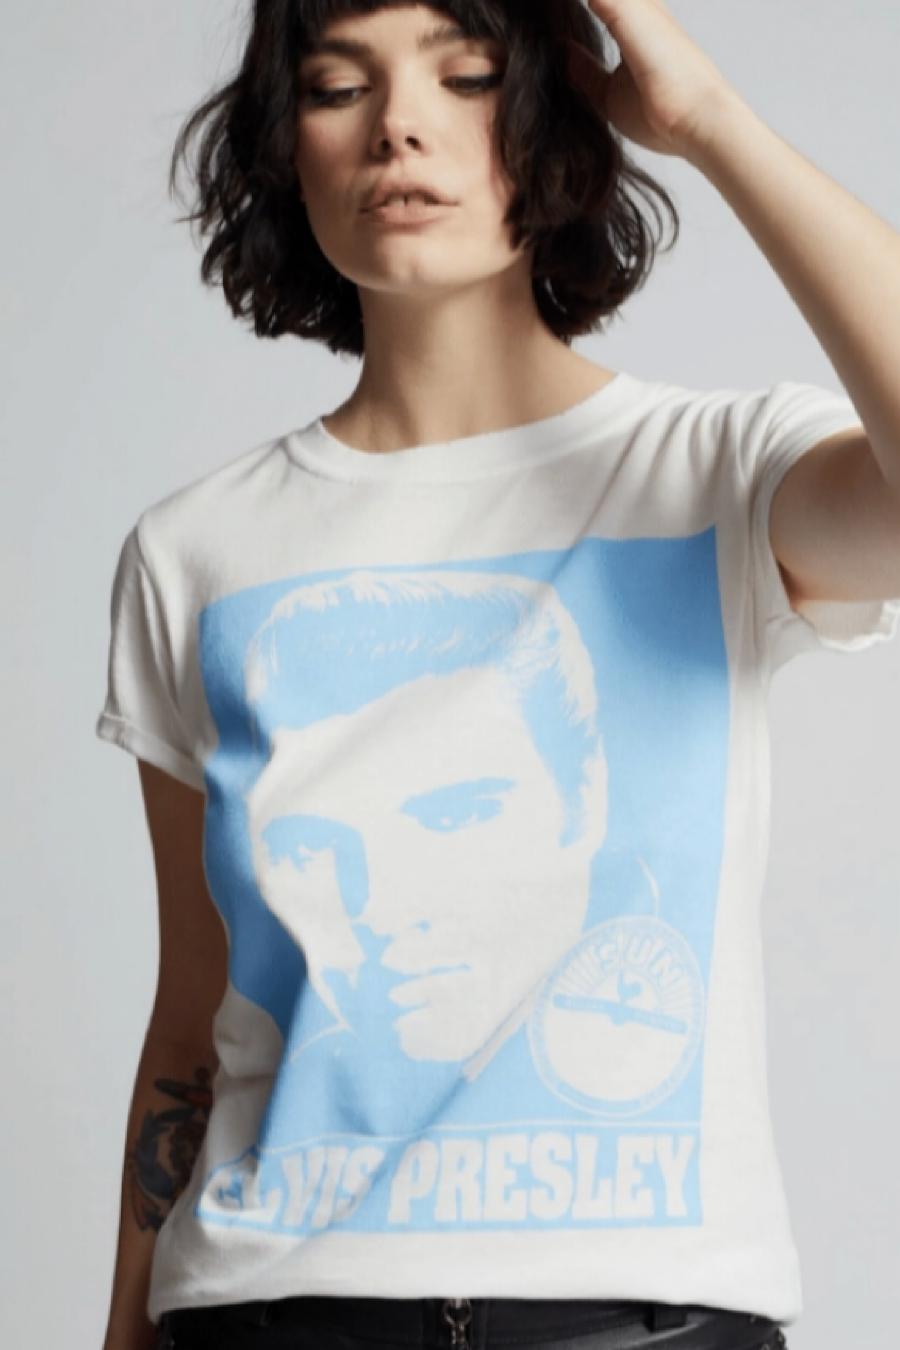 Elvis Presley Sun Records T-Shirt